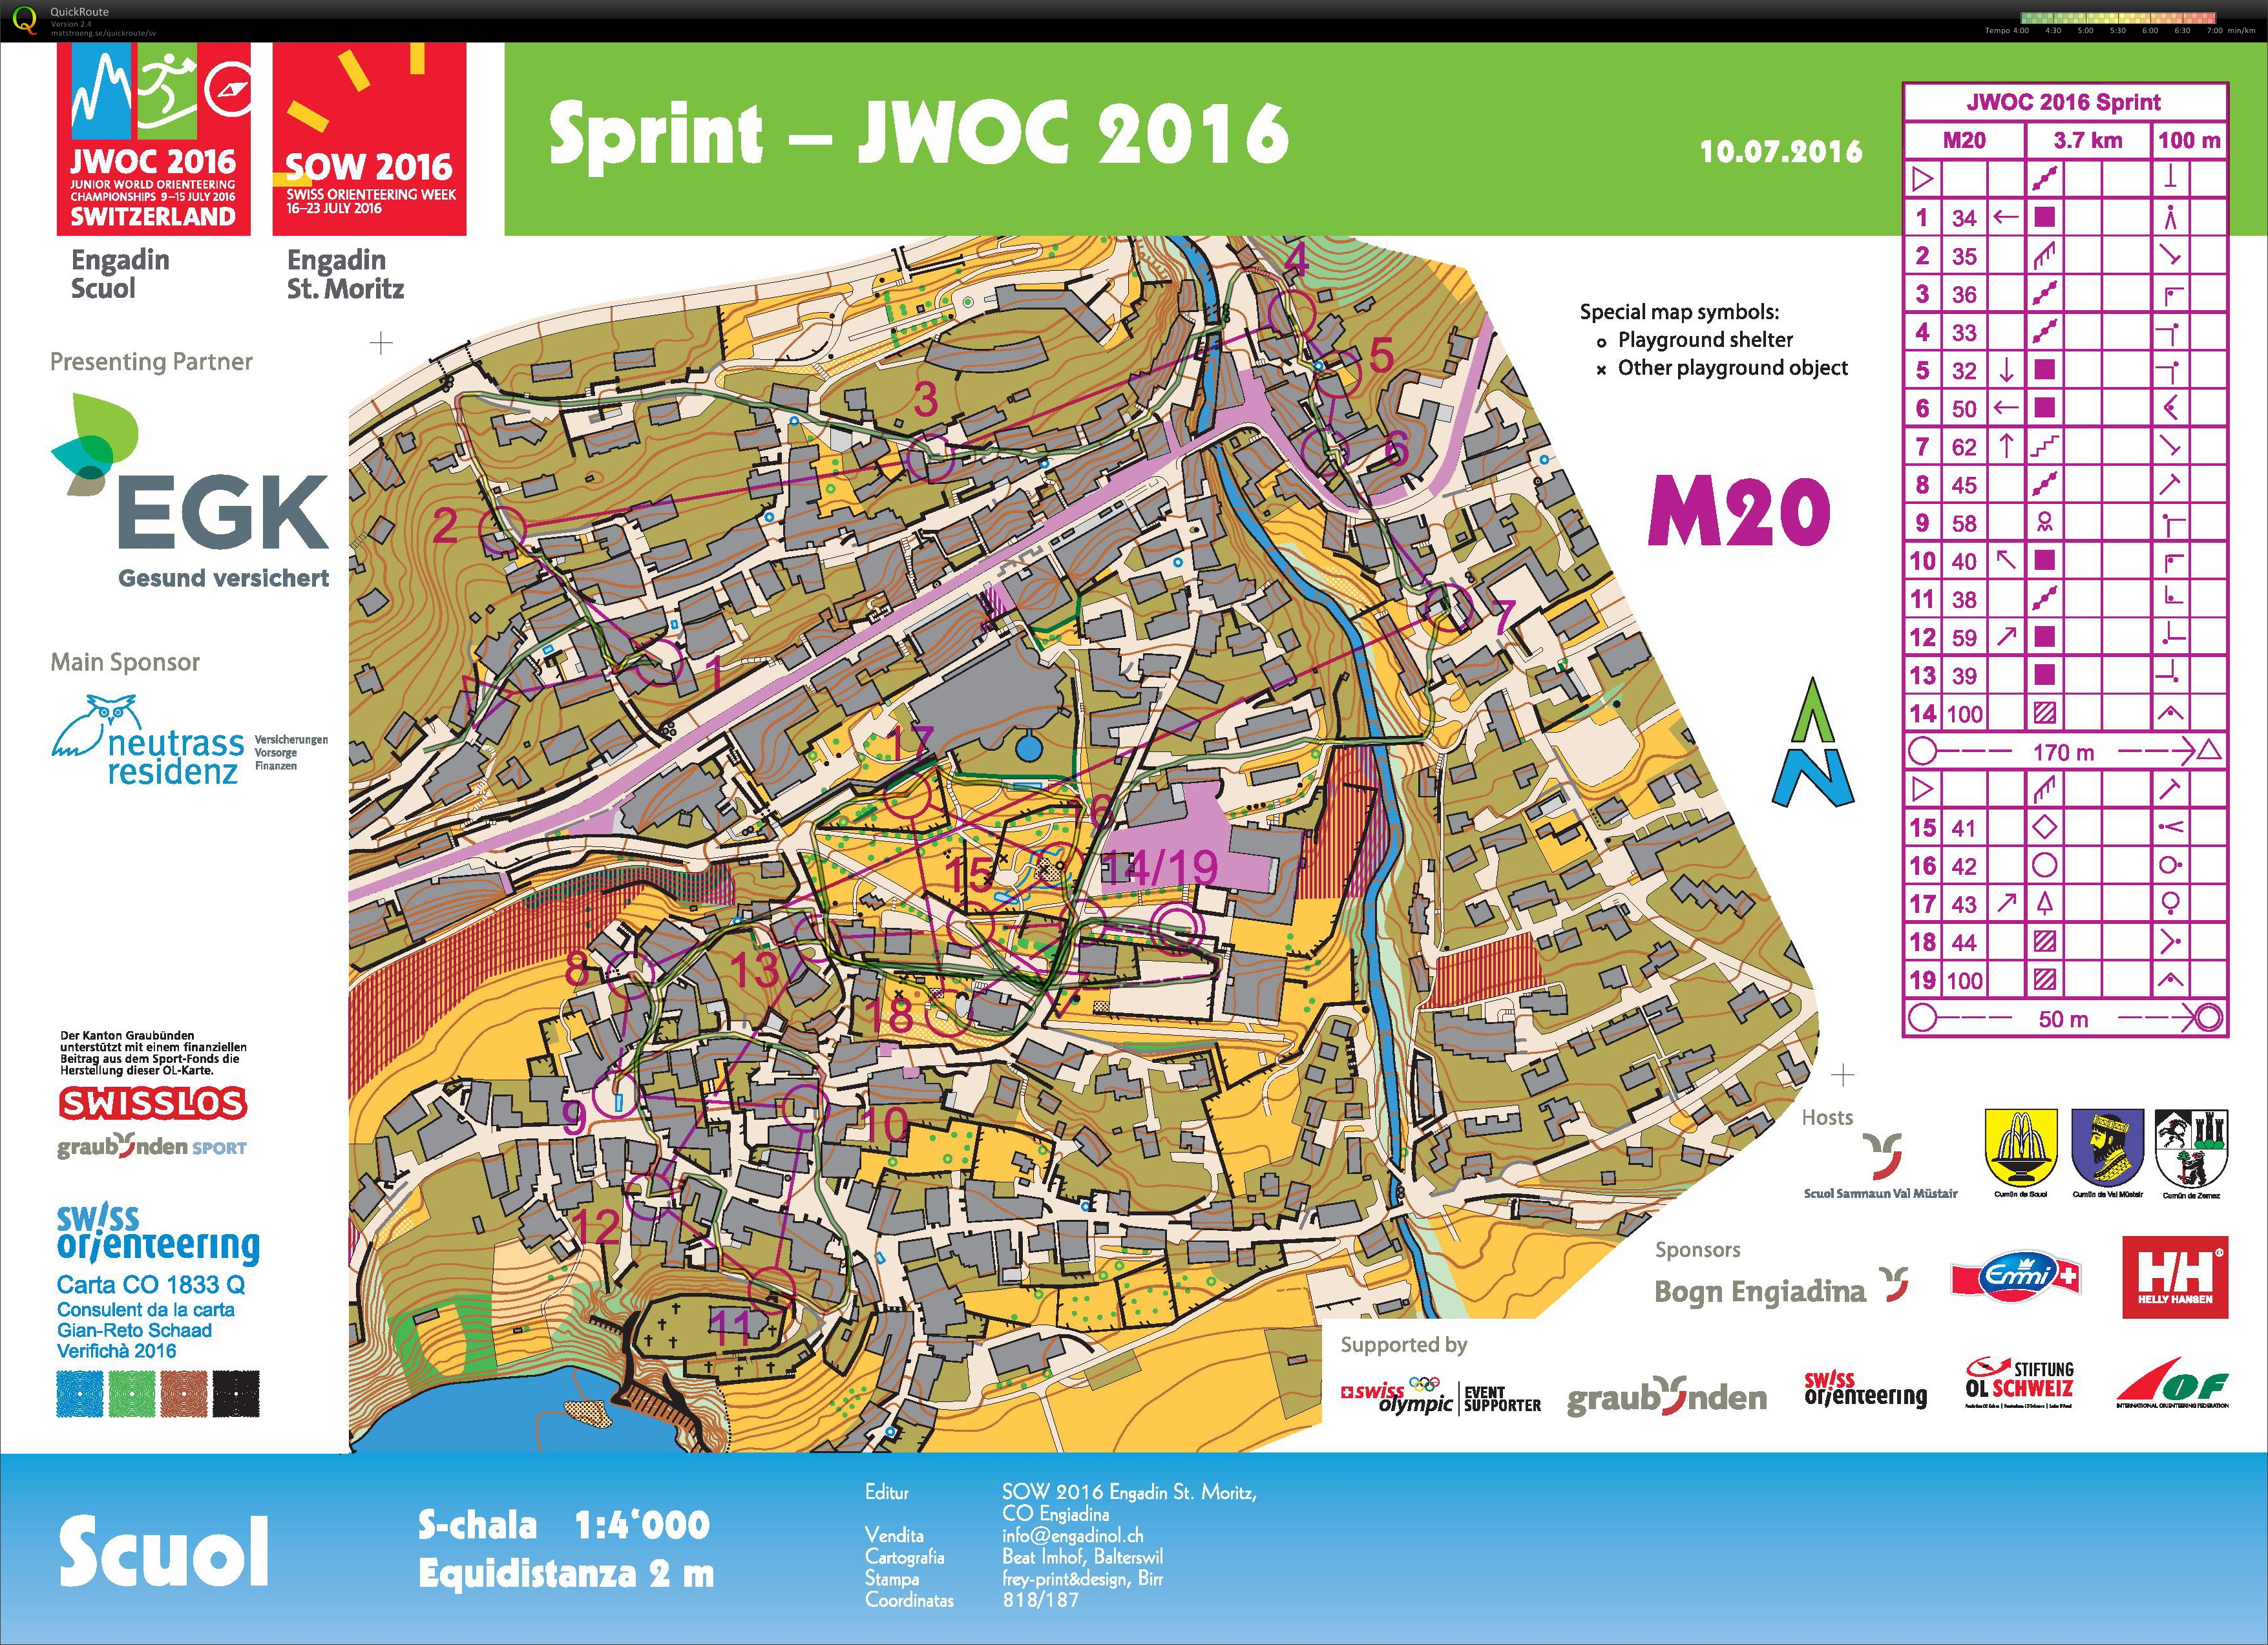 JWOC Sprint (10-07-2016)